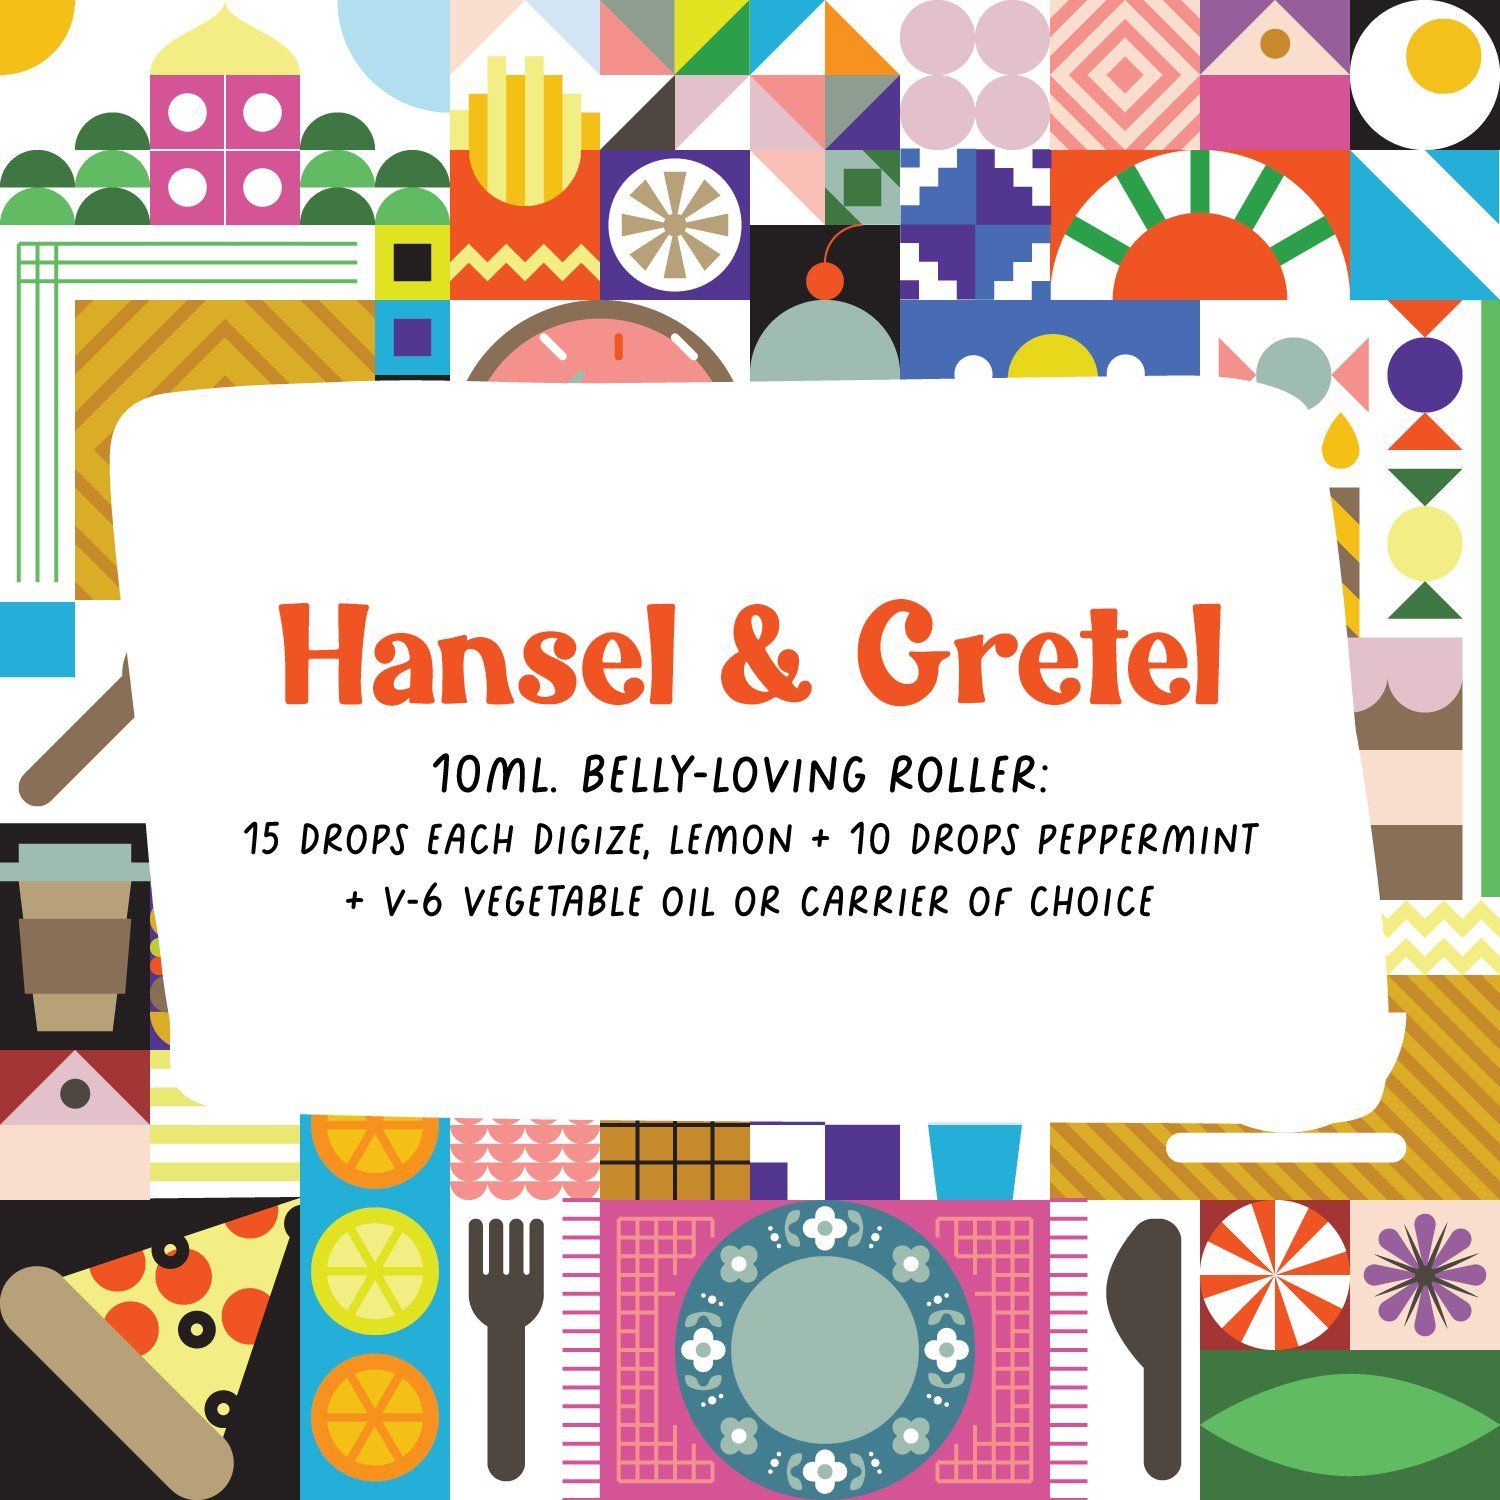 Hansel and Gretel Rollers & Sprays